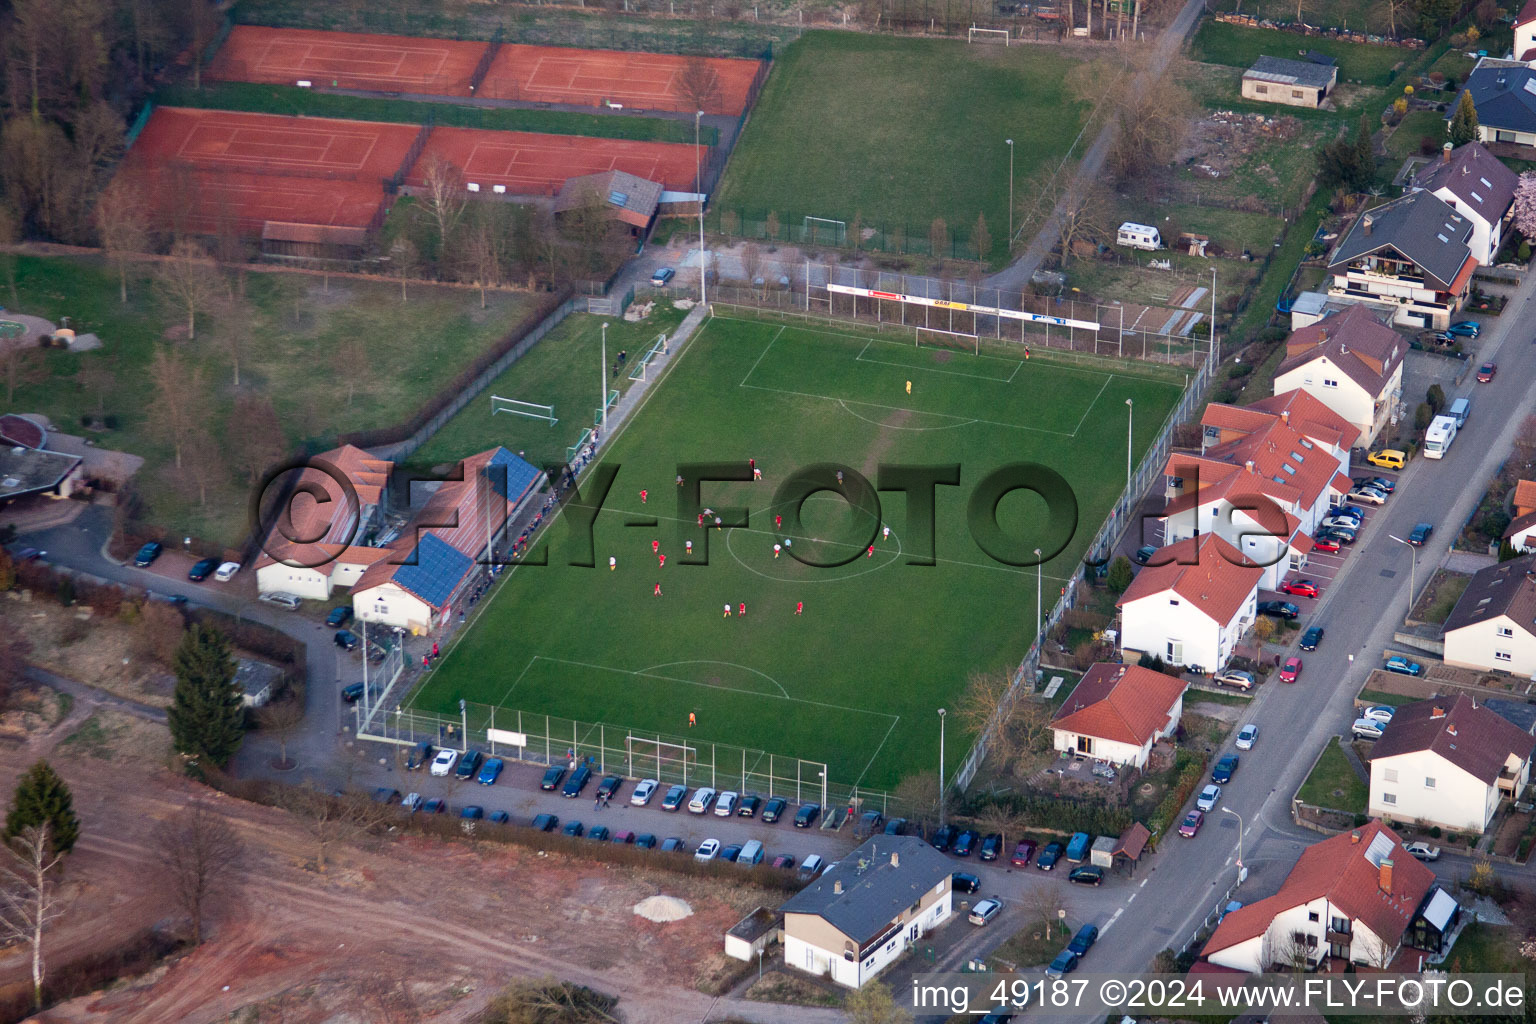 Sports fields in the district Ingenheim in Billigheim-Ingenheim in the state Rhineland-Palatinate, Germany viewn from the air